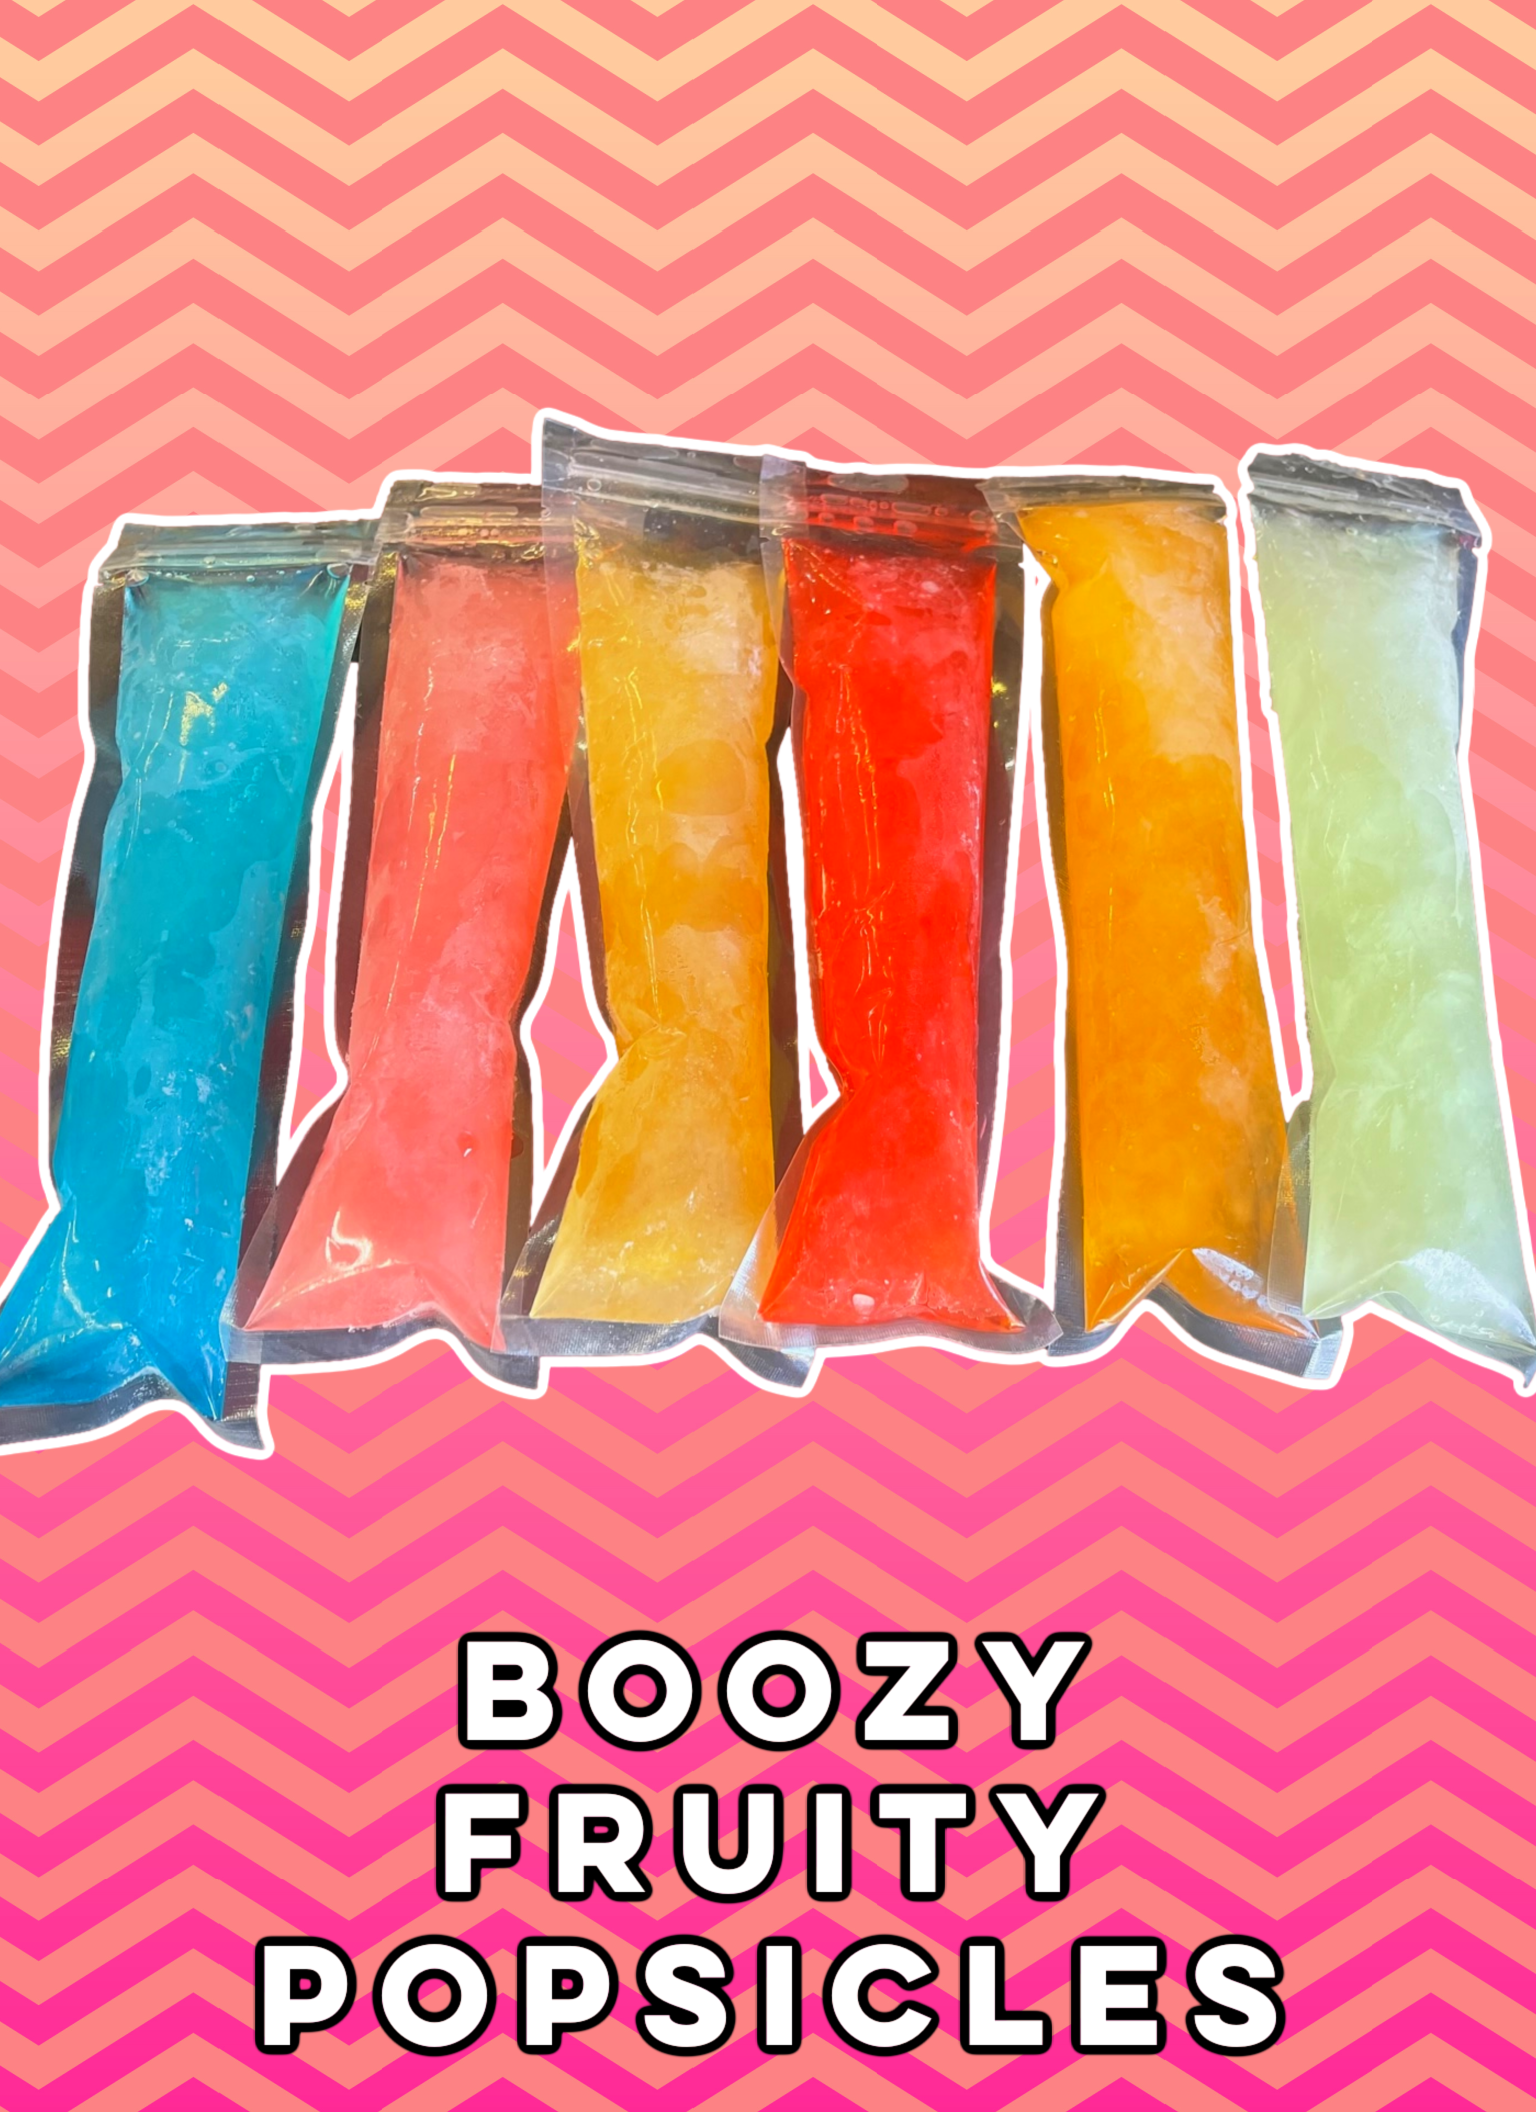 Boozy Fruity Popsicles